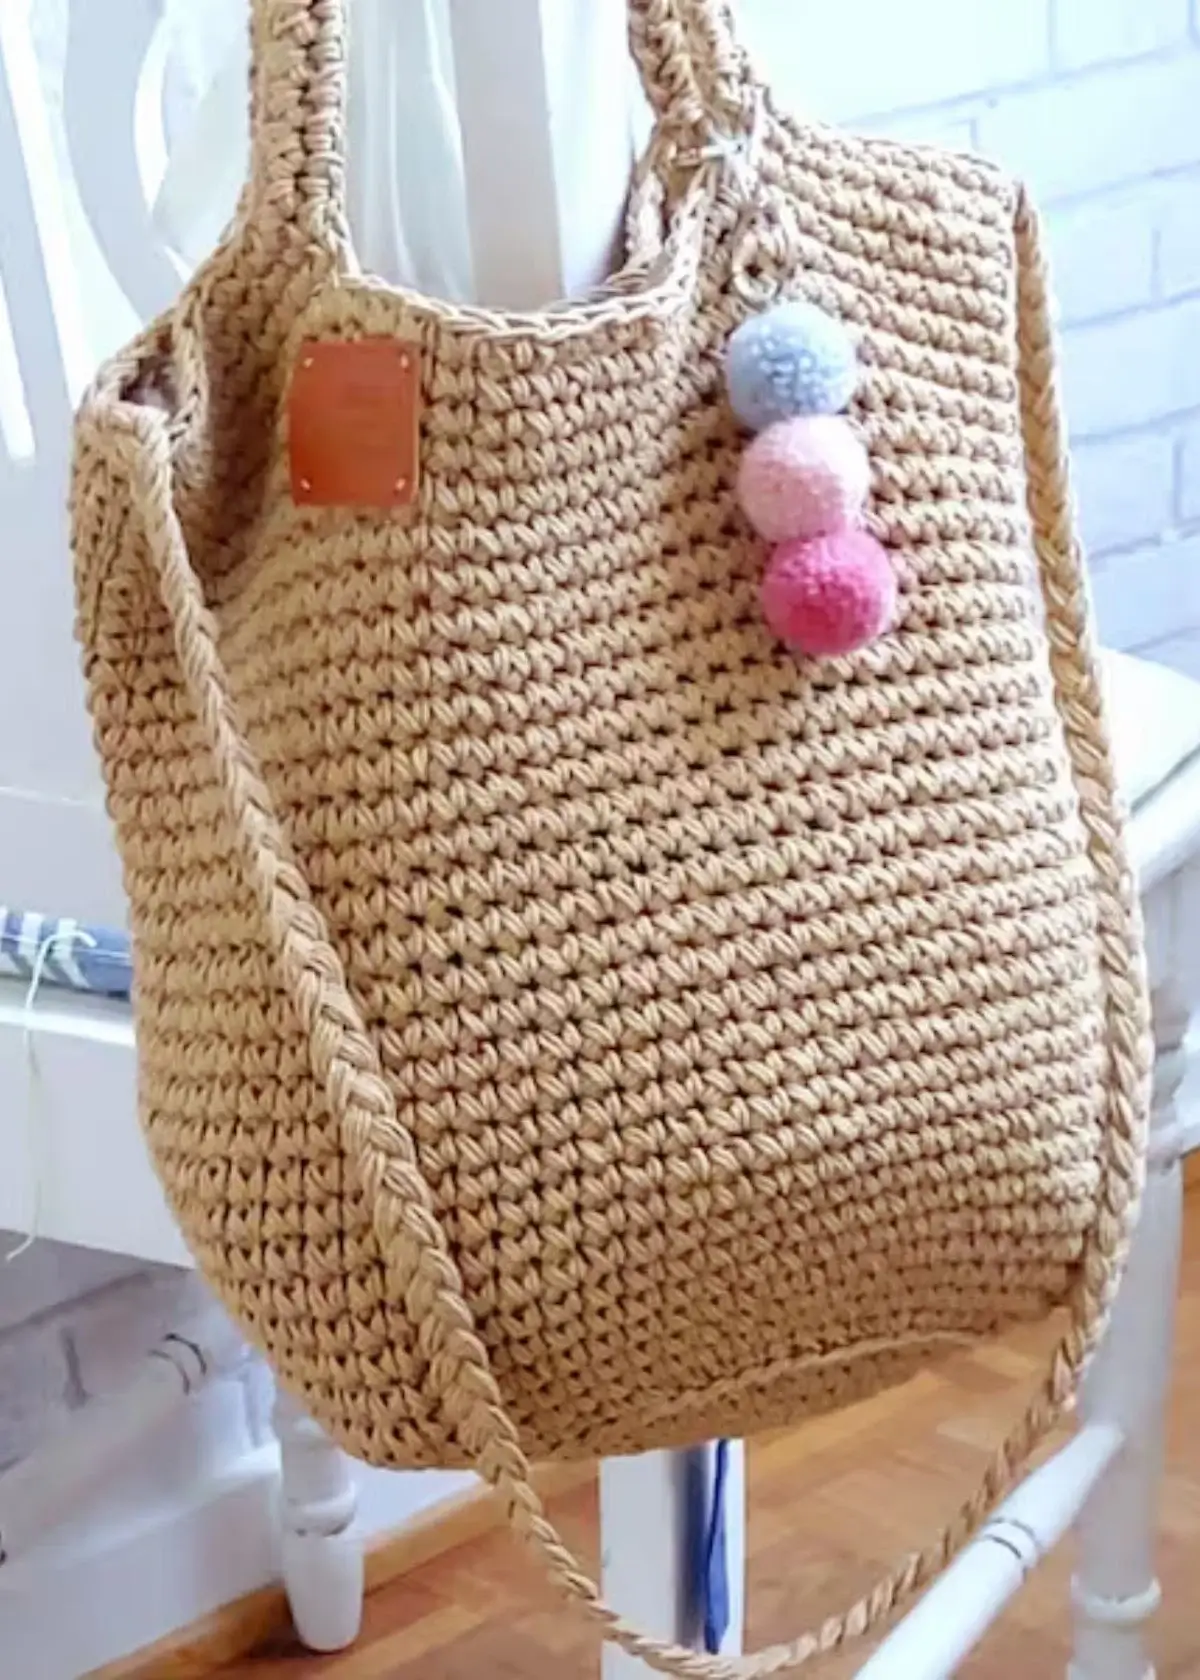 Can I wash my crochet bag?